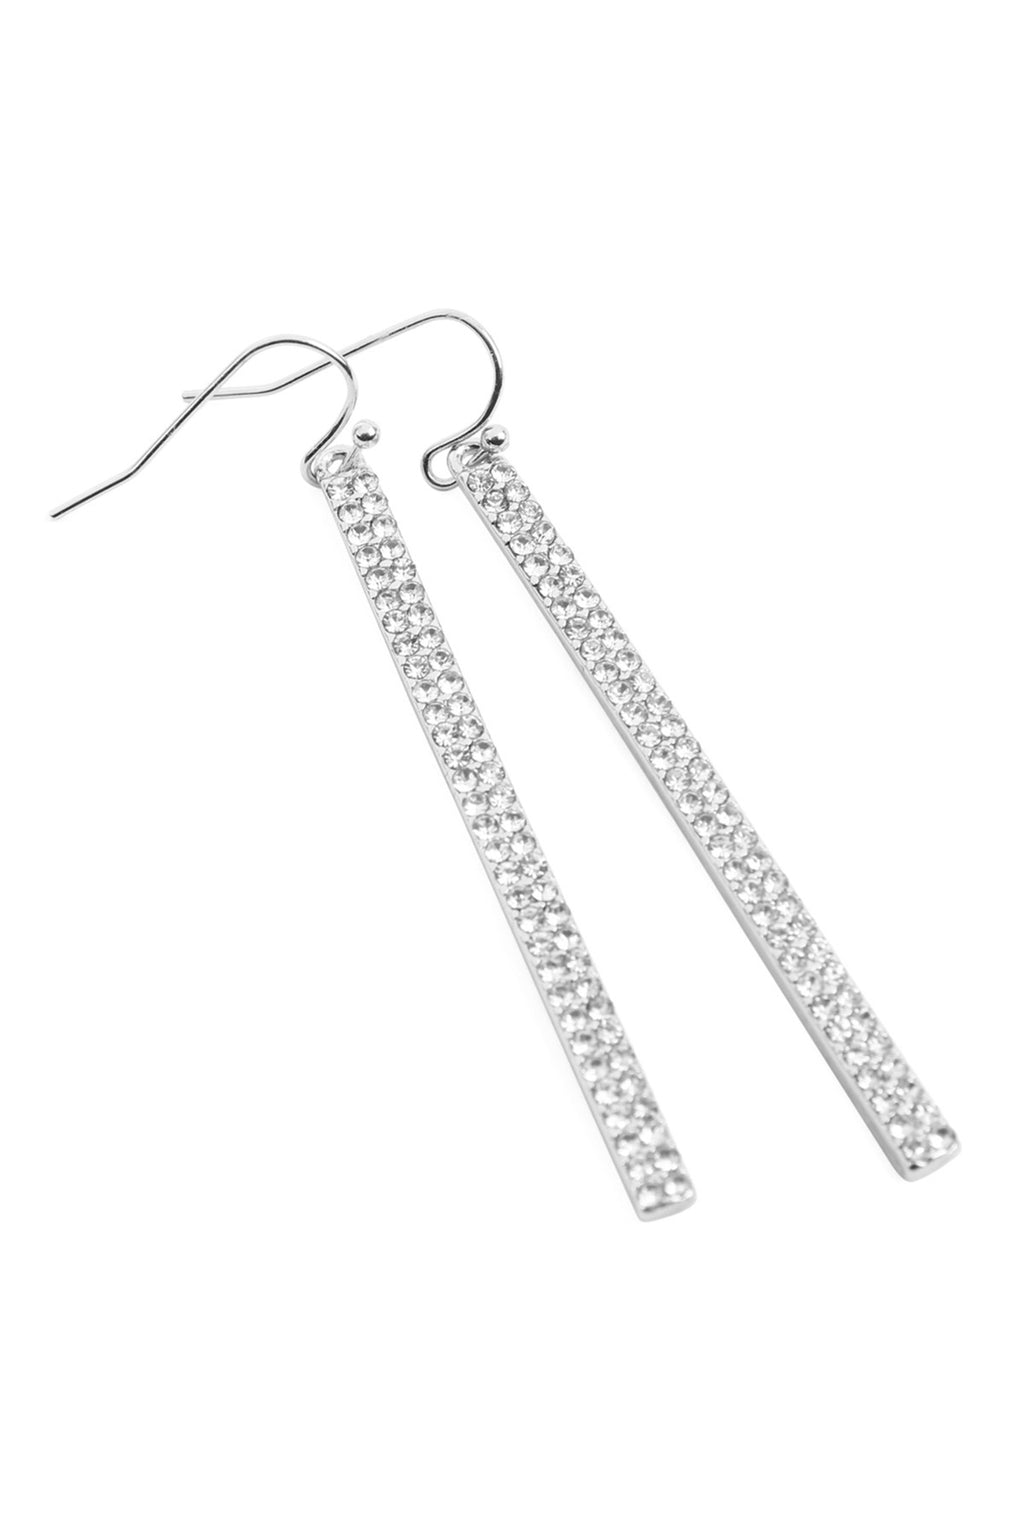 Silver Clear Rhinestone Bar Drop Earrings - Pack of 6